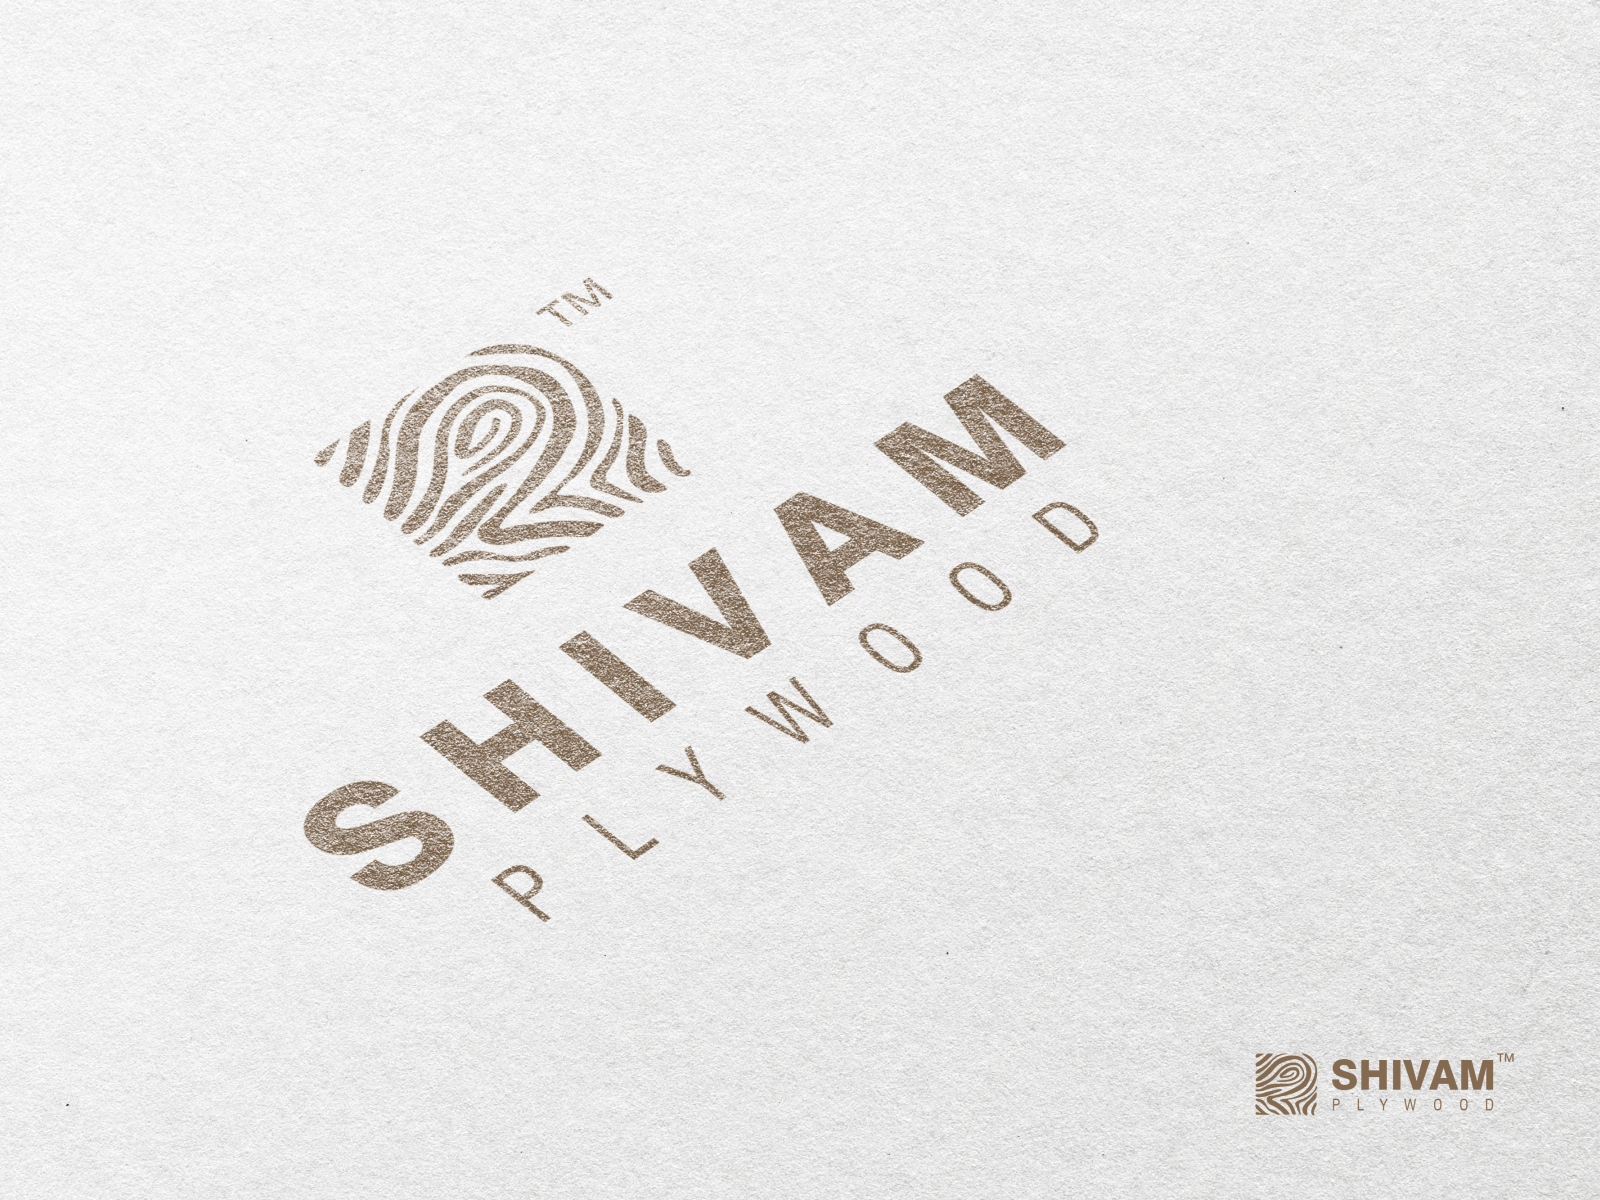 Shivam Logo Design by Creaftedpixxxels on Dribbble